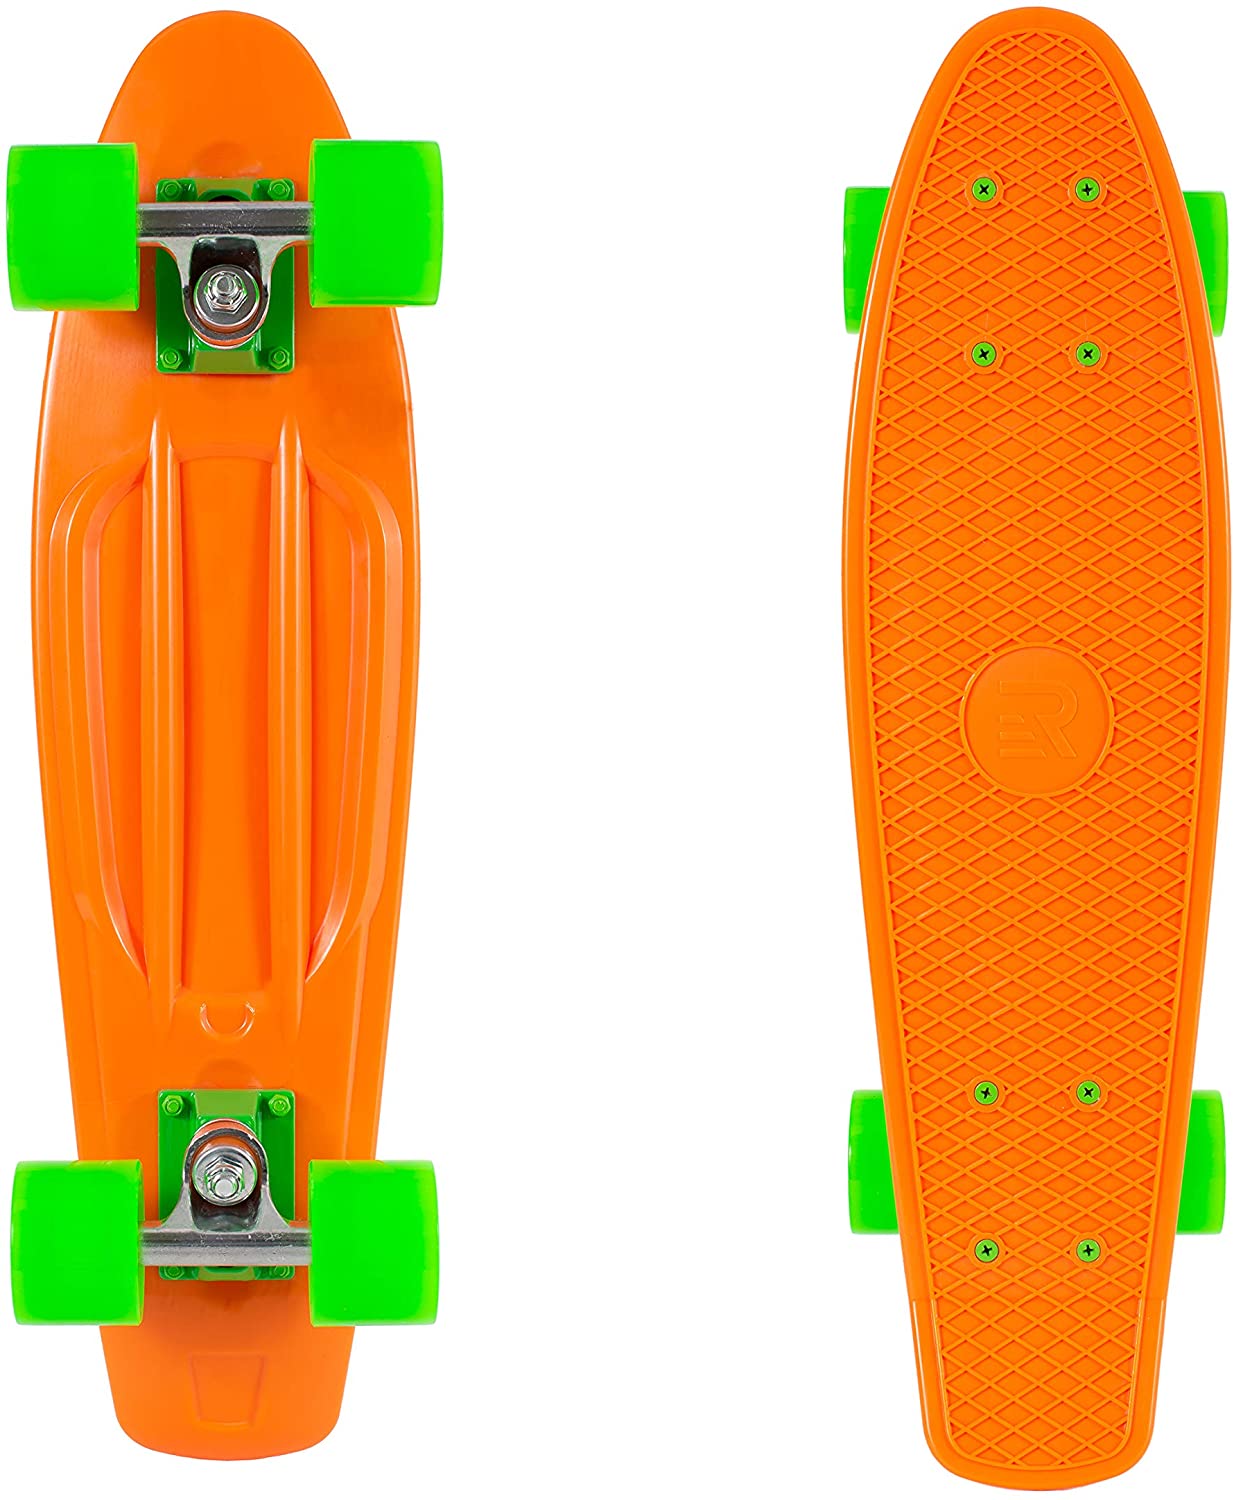 Highly Flexible Plastic Cruiser Board Mini 22 Inch Skateboards with High Rebound PU Wheels for Beginners Kids Teens Complete Skateboards Standard Skateboards 